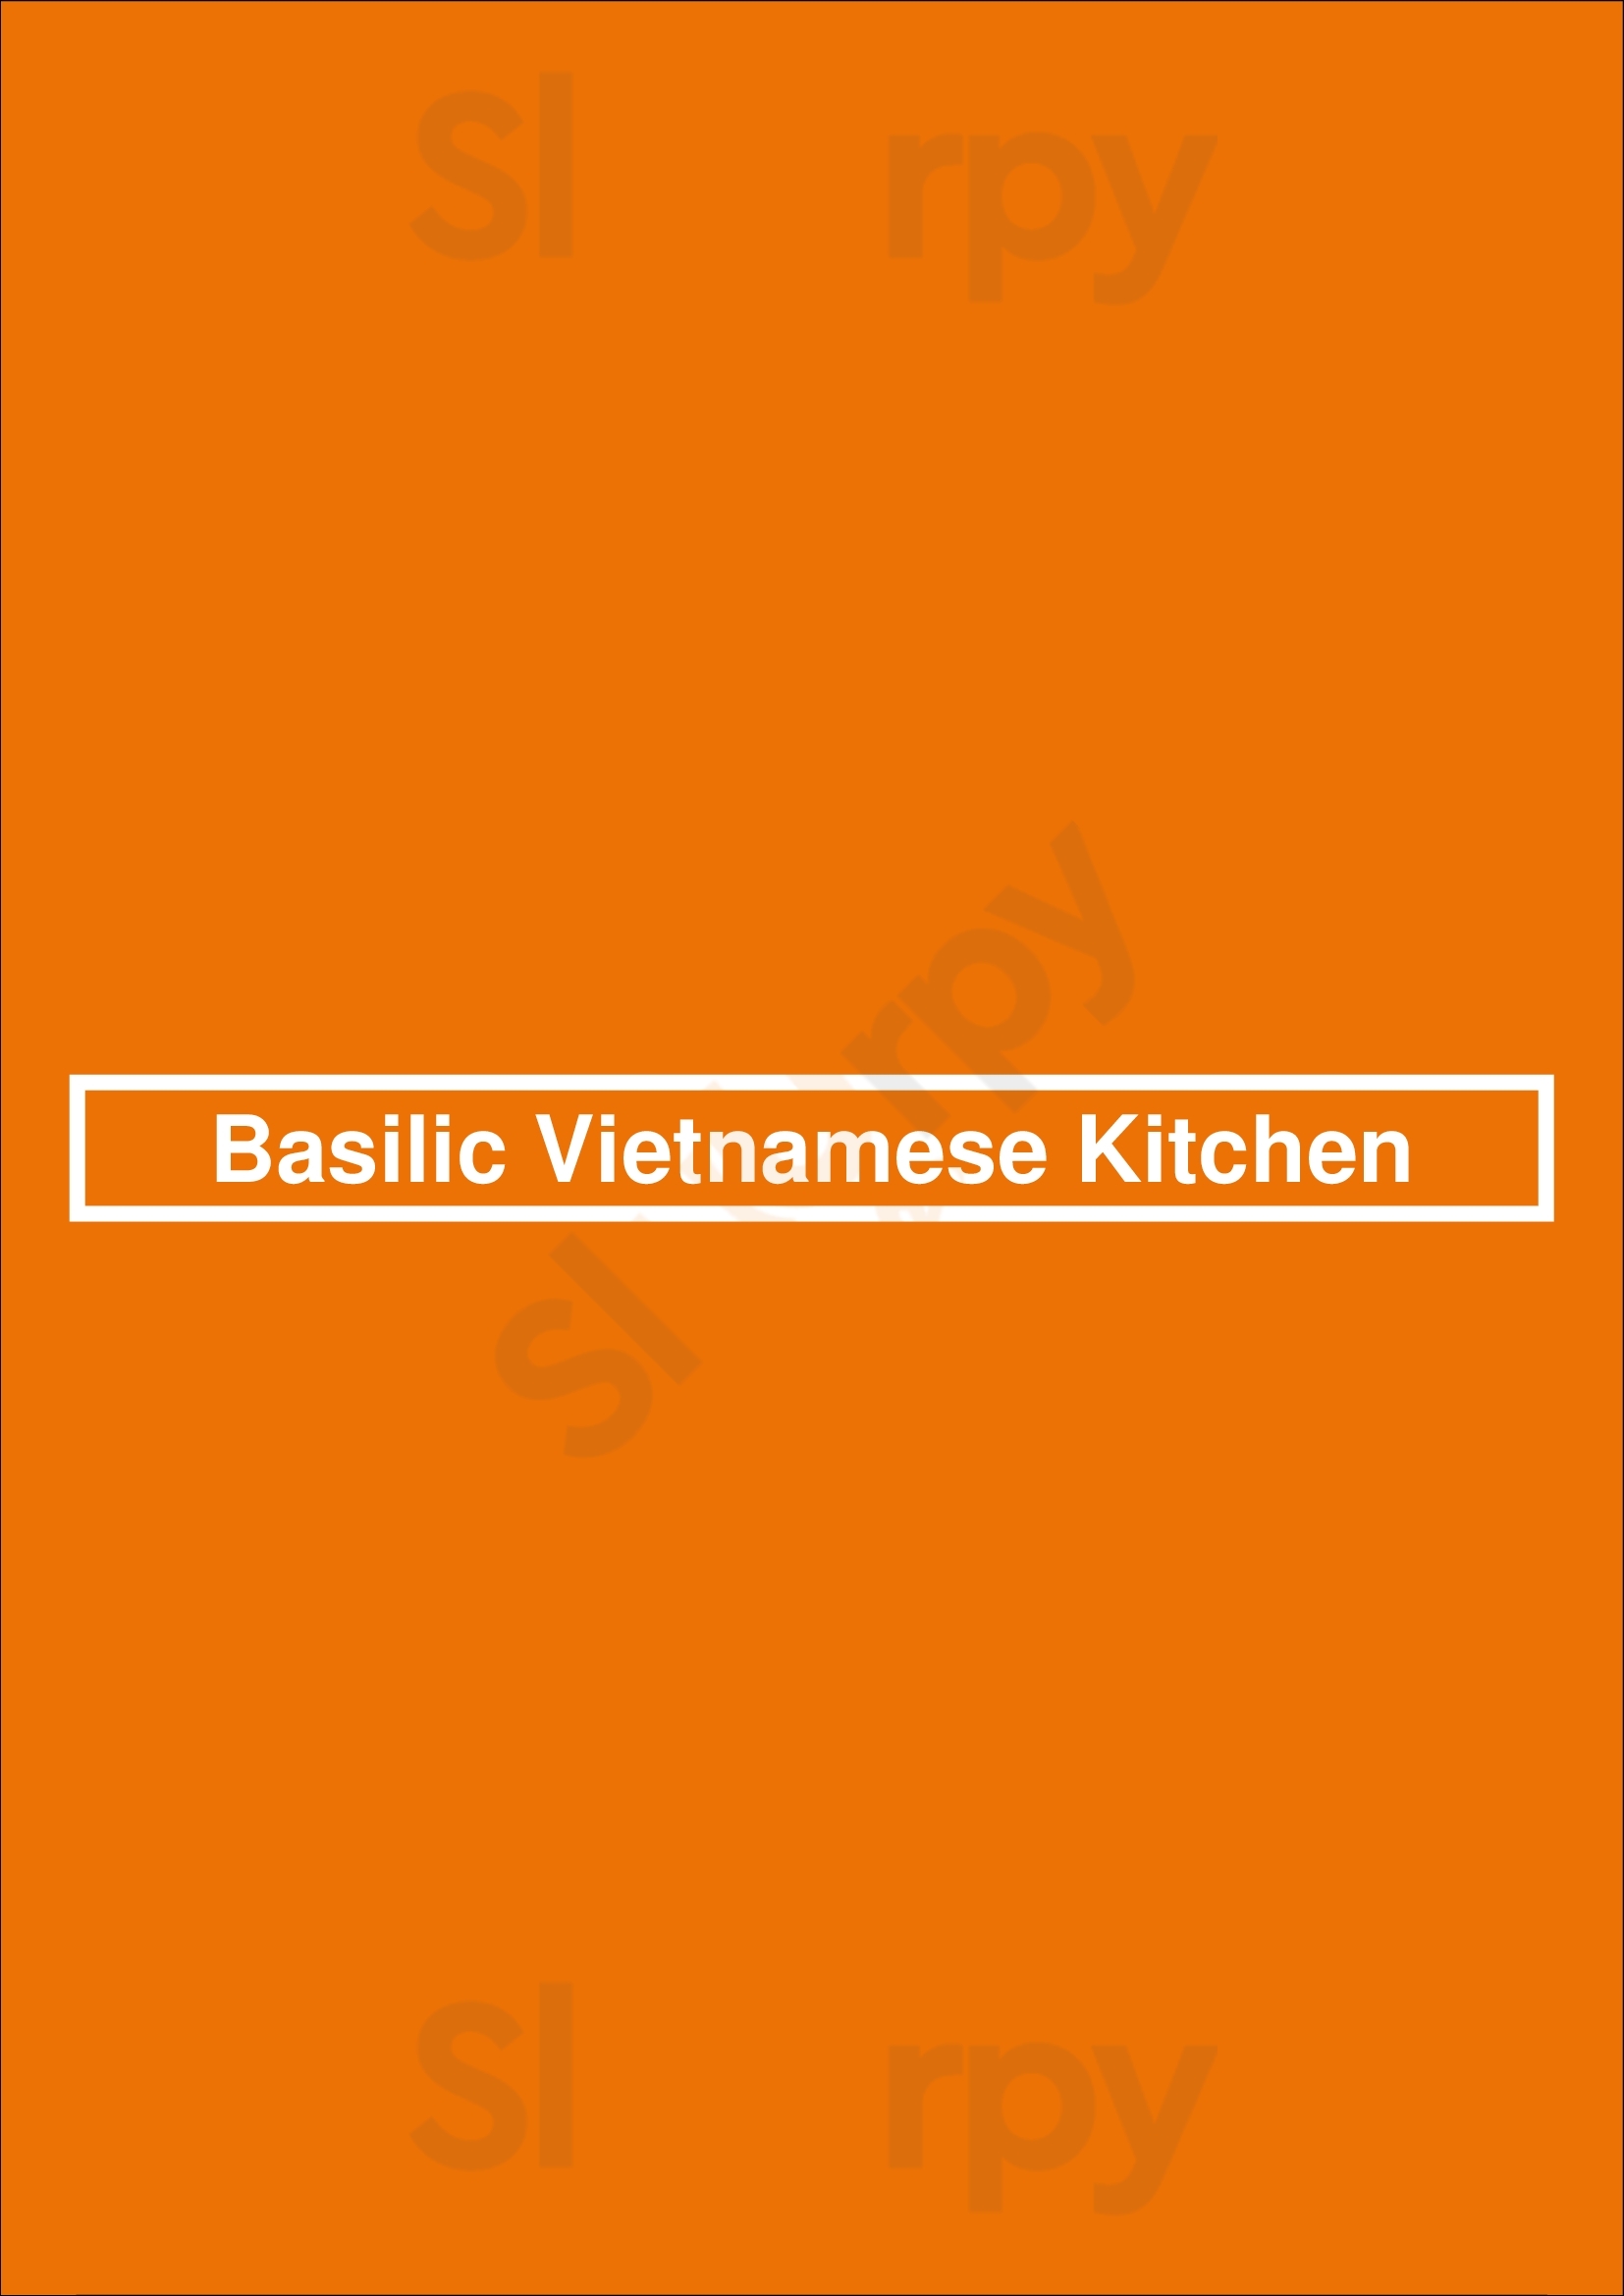 Basilic Vietnamese Kitchen Phoenix Menu - 1